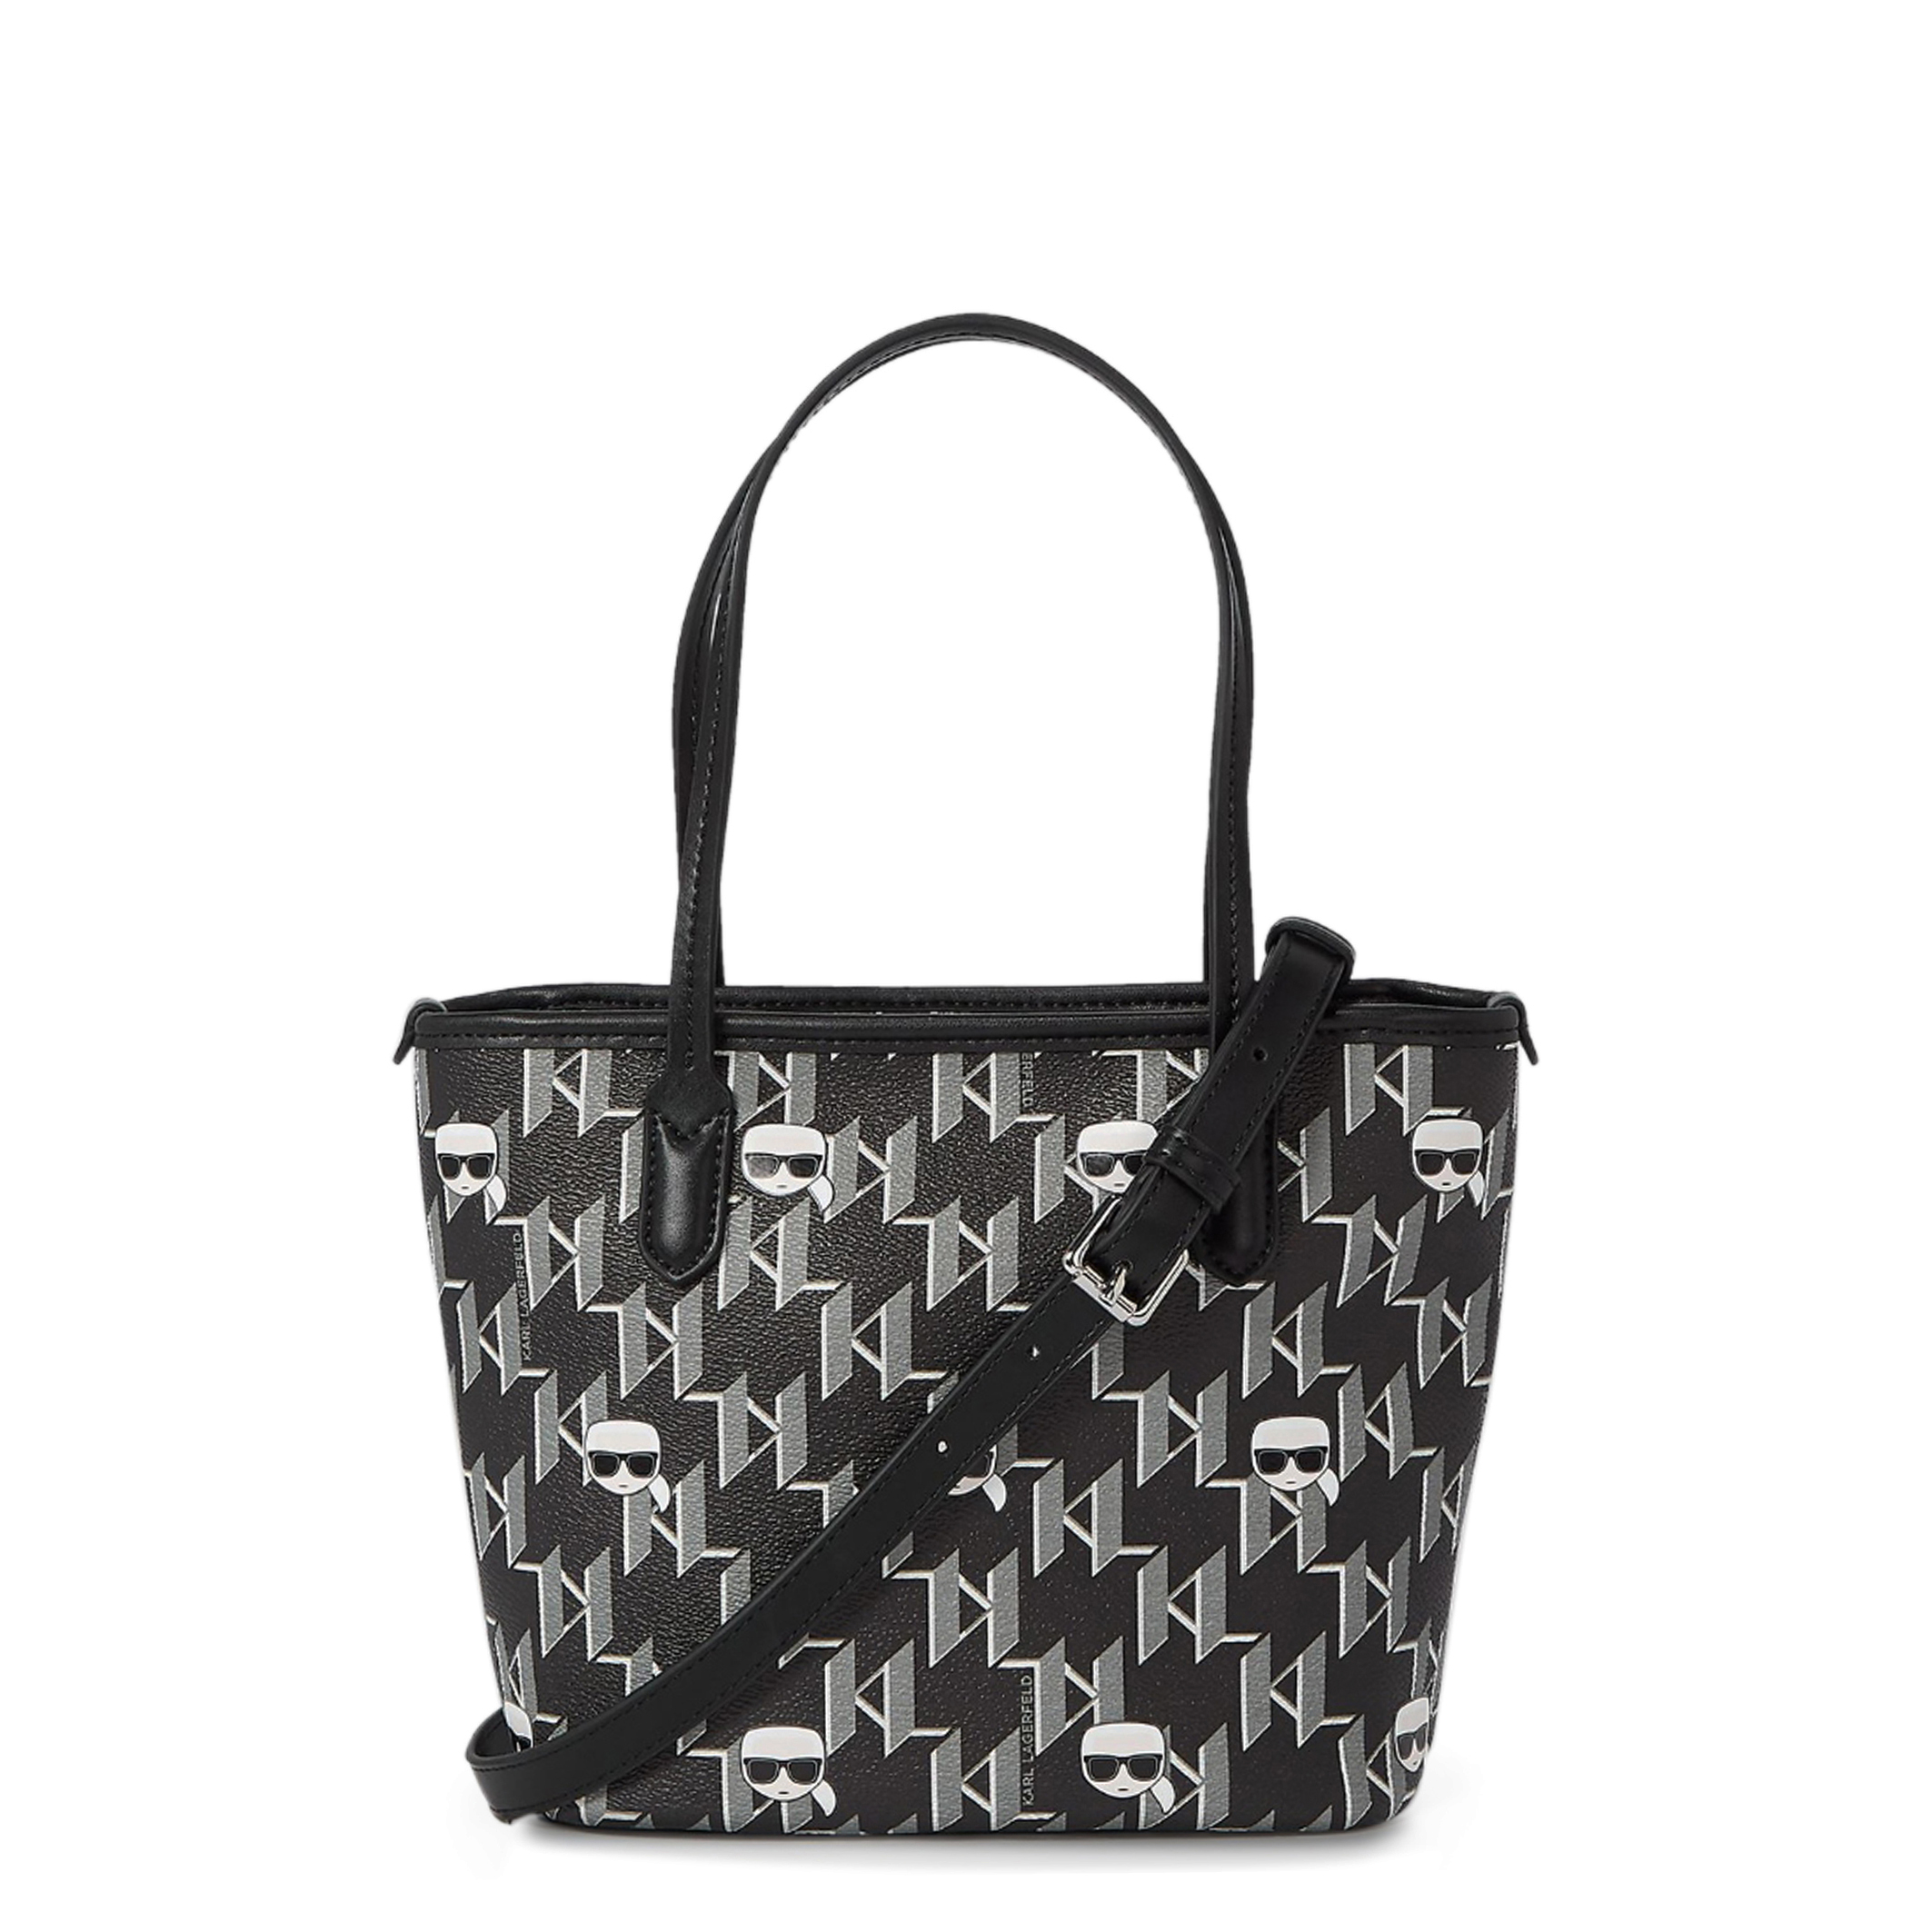 Karl Lagerfeld Black Handbags for Women - 225W3028